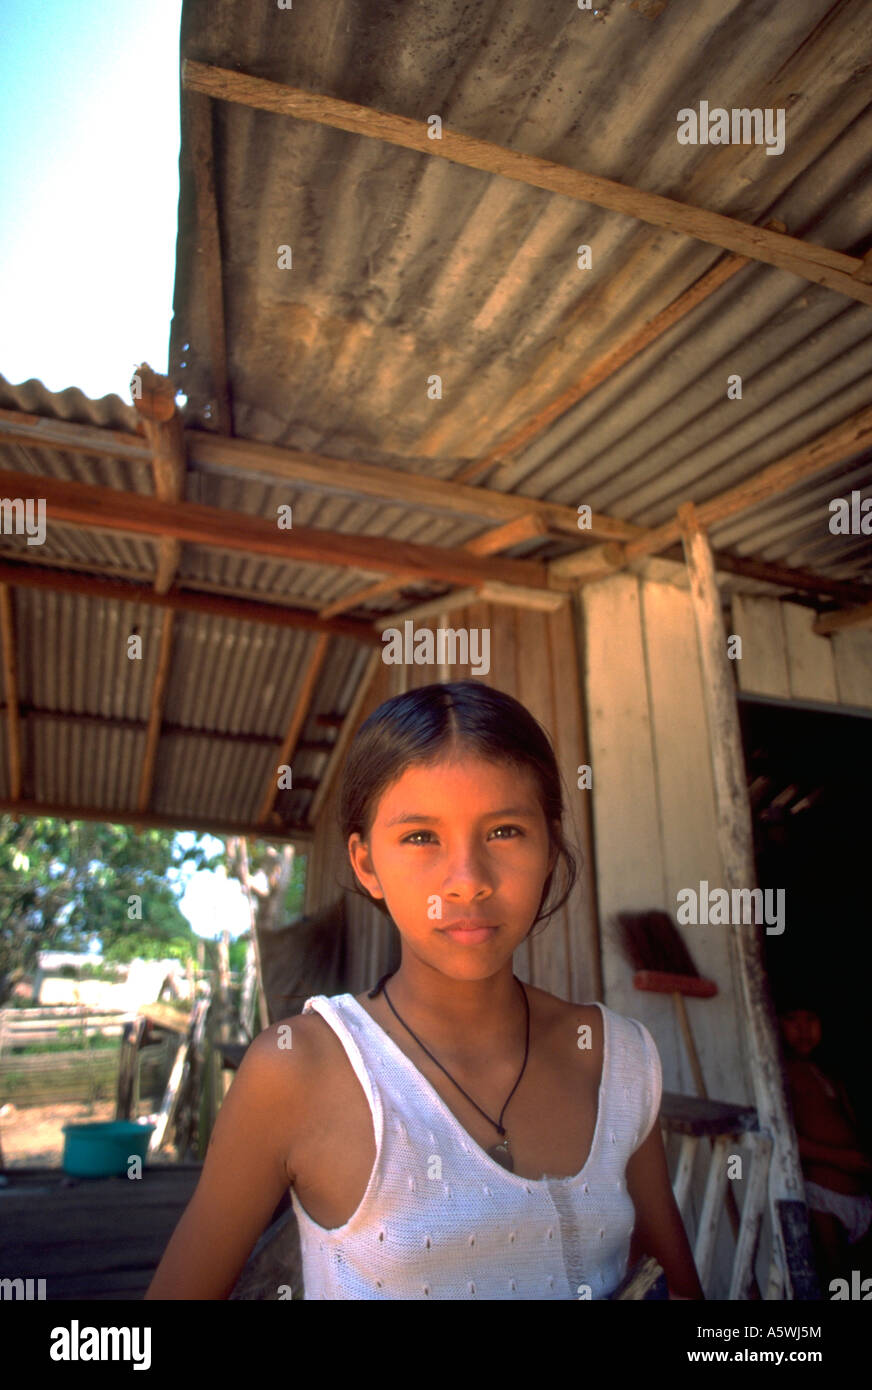 Painet Hk2344 Village Girl Child Kid Poses For Camera Amazom River Region Brazil Sympathetic Shanty Tears Amazon Portrait At Stock Photo Alamy